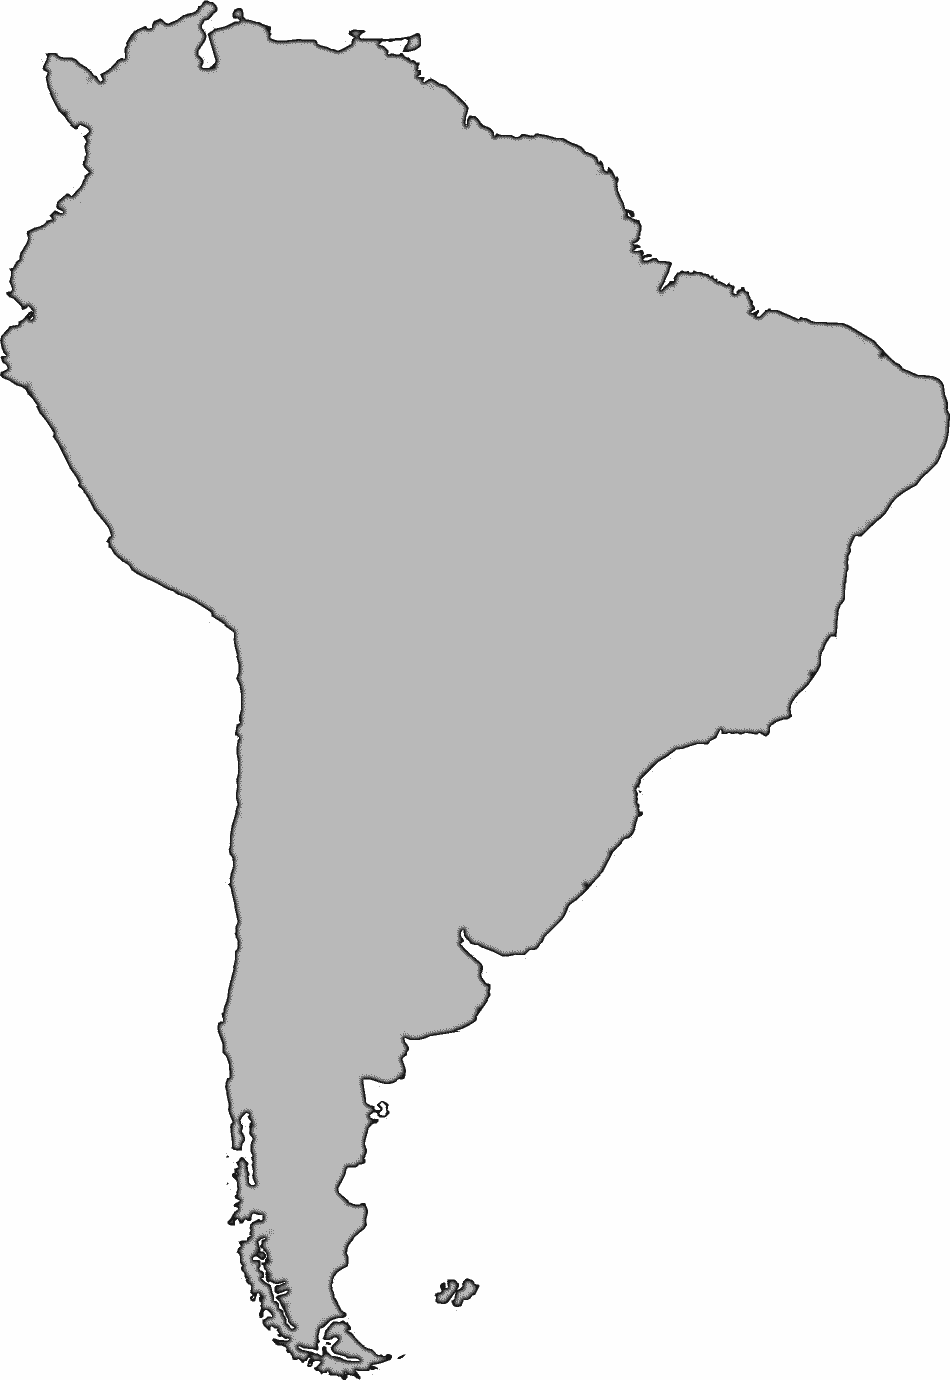 South America large